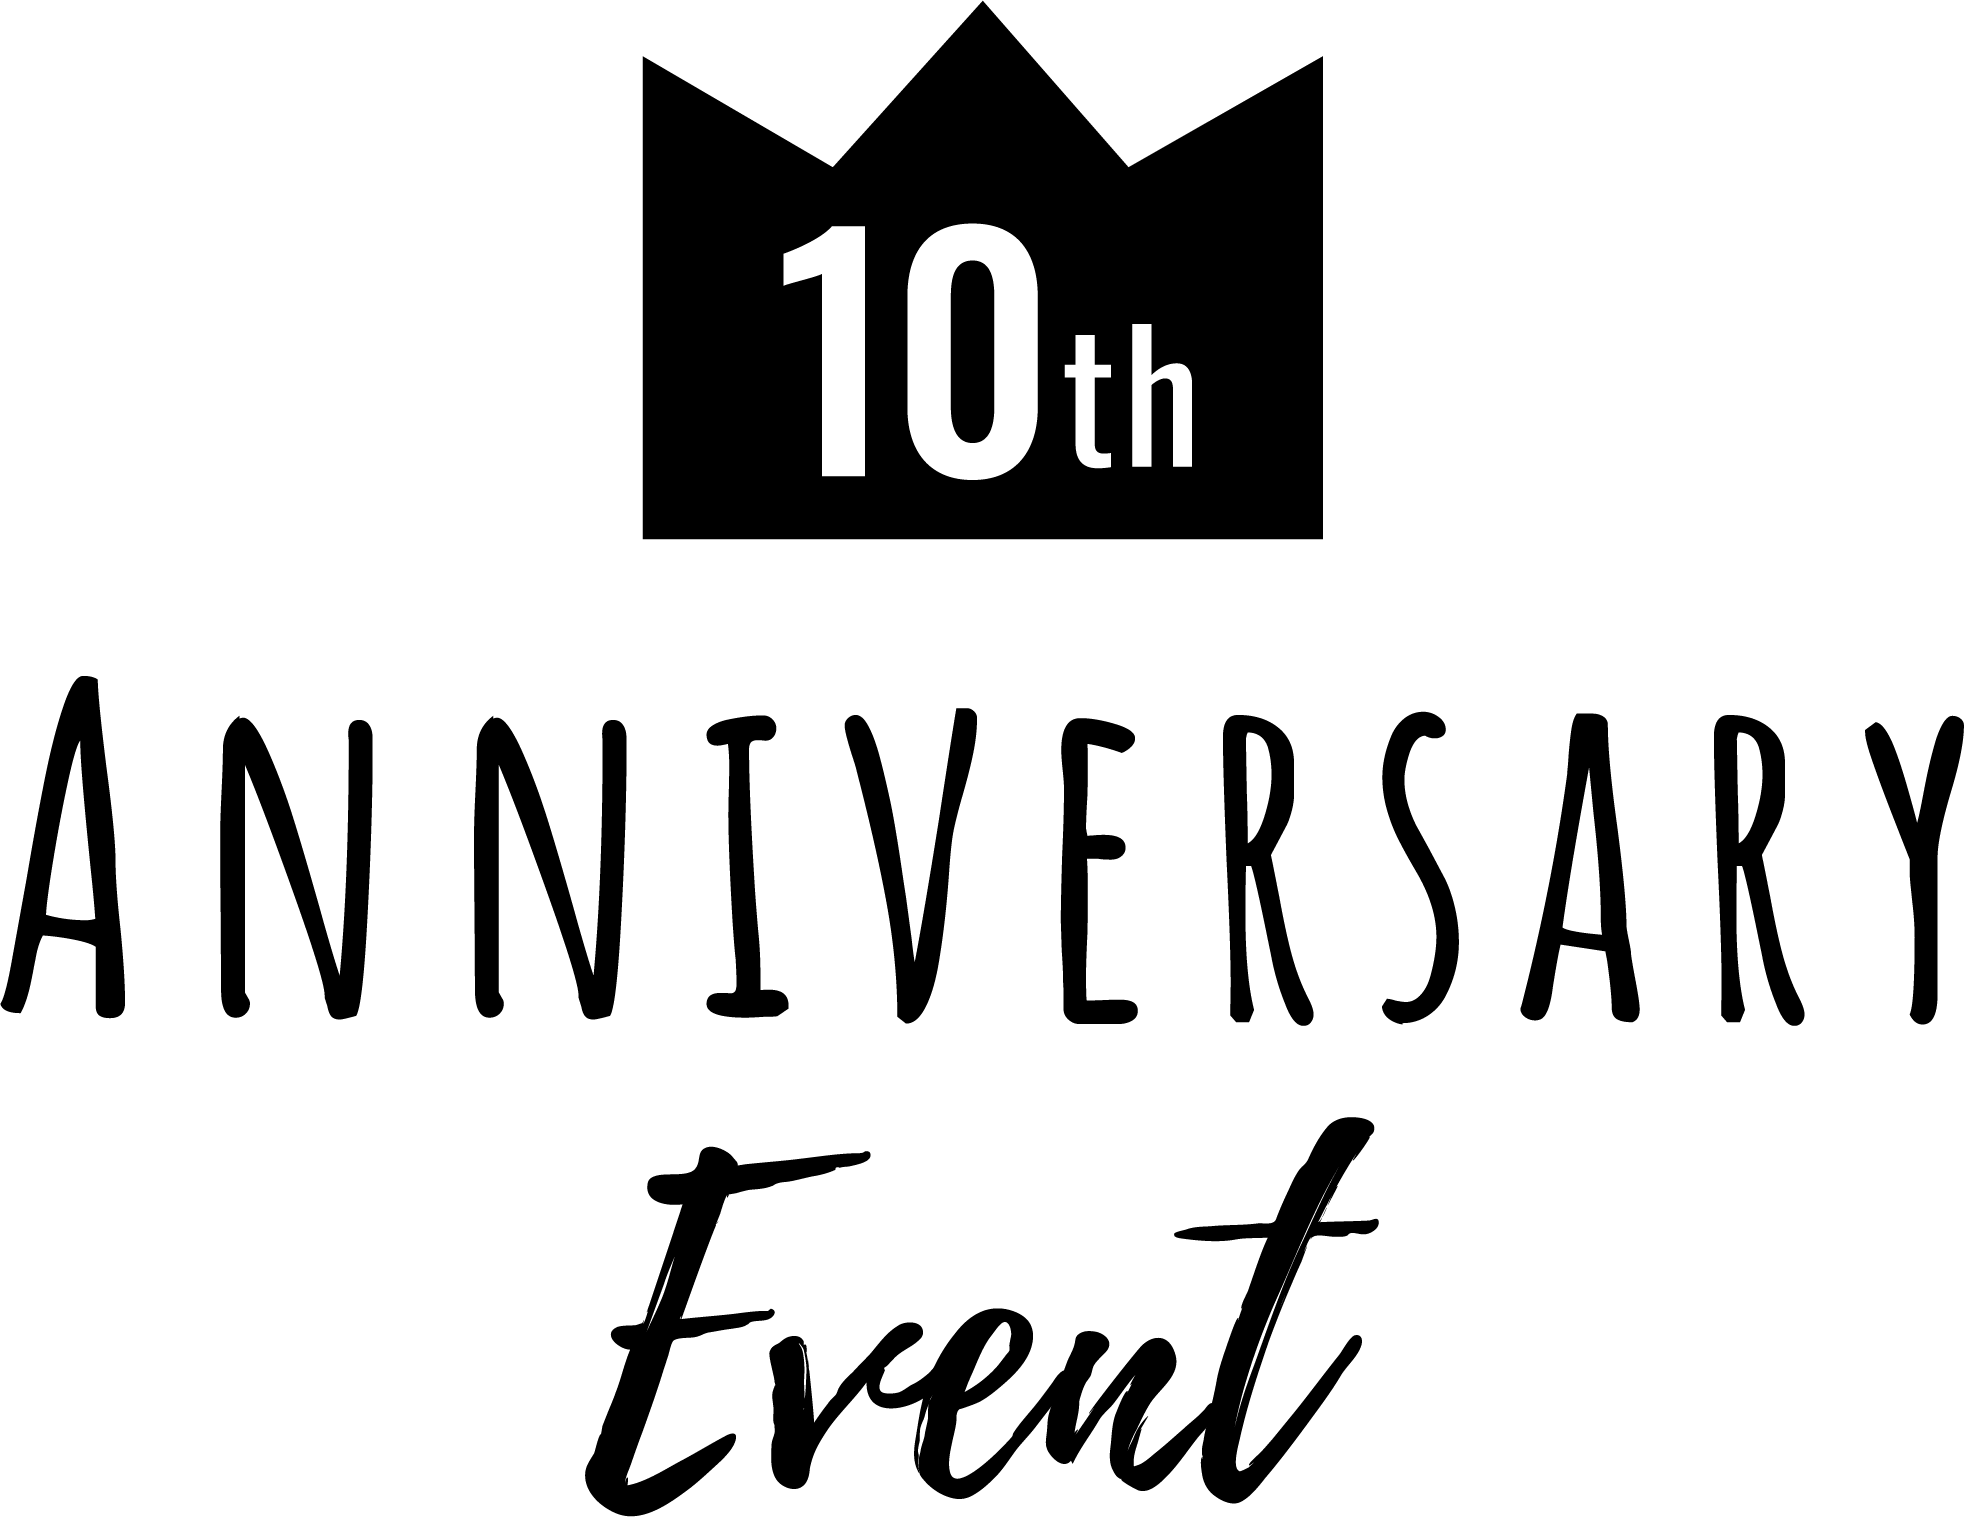 10th ANNIVERSARY EVENT